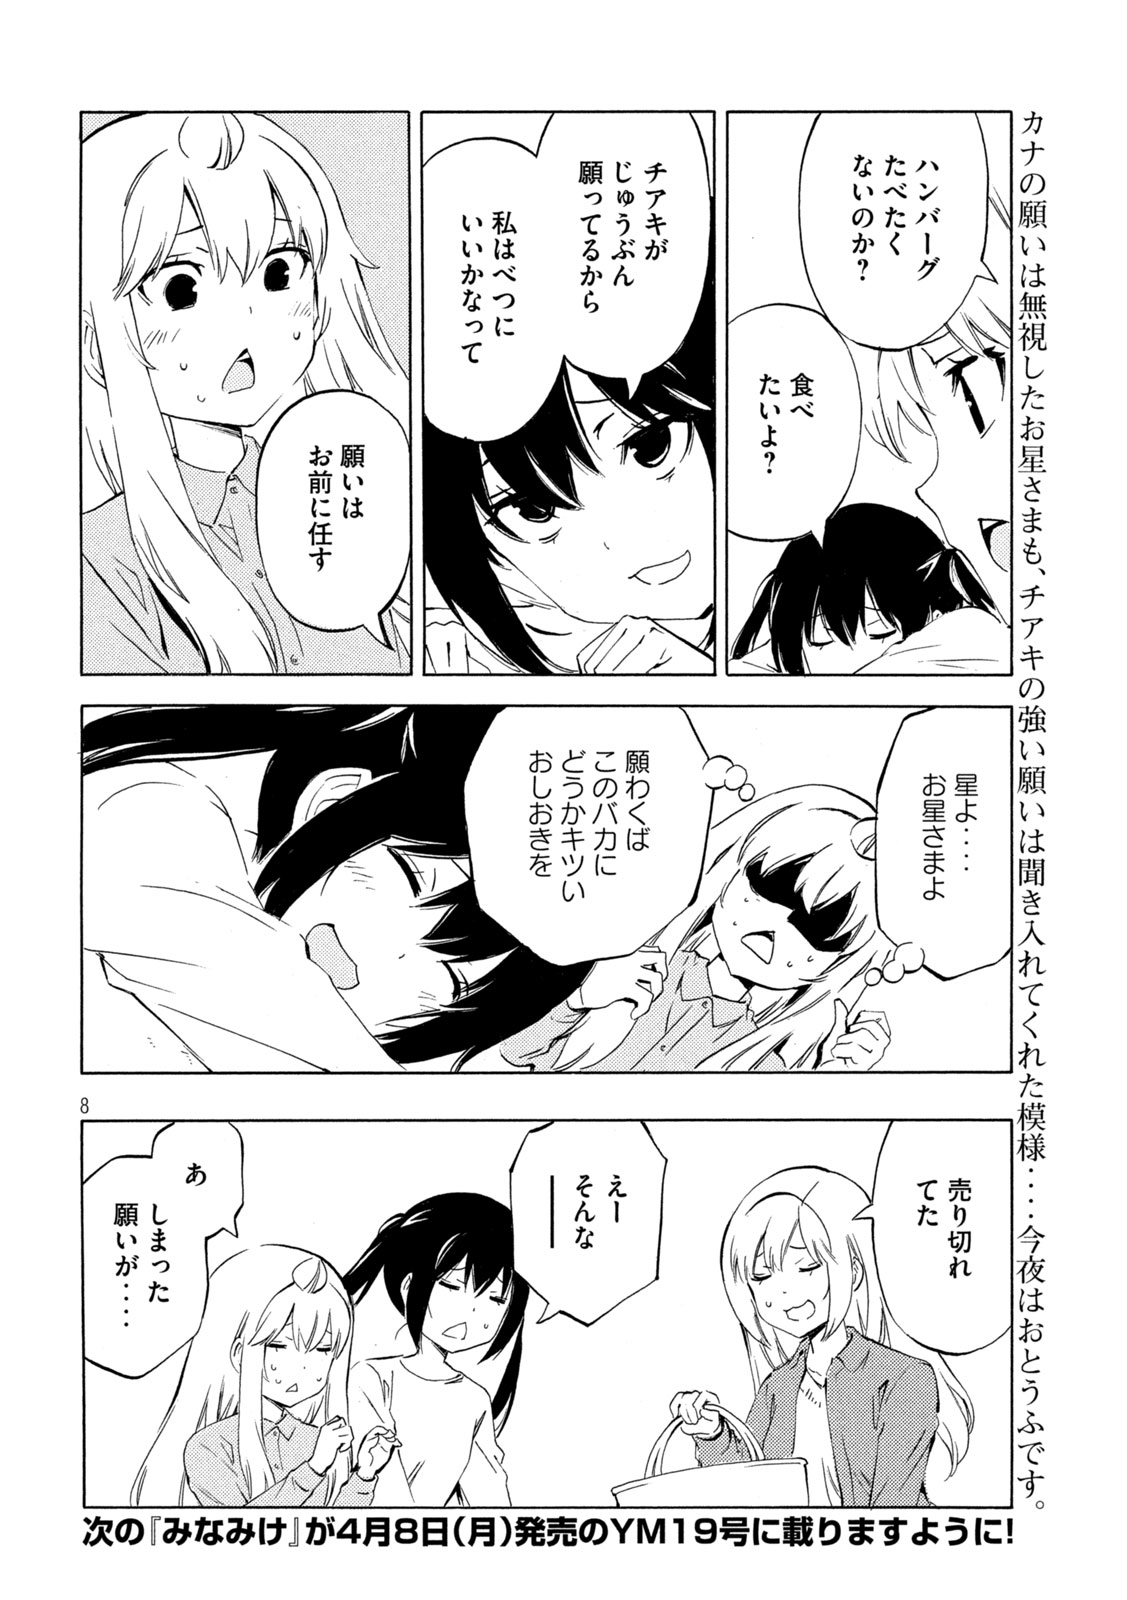 Minami-ke - Chapter 481 - Page 8